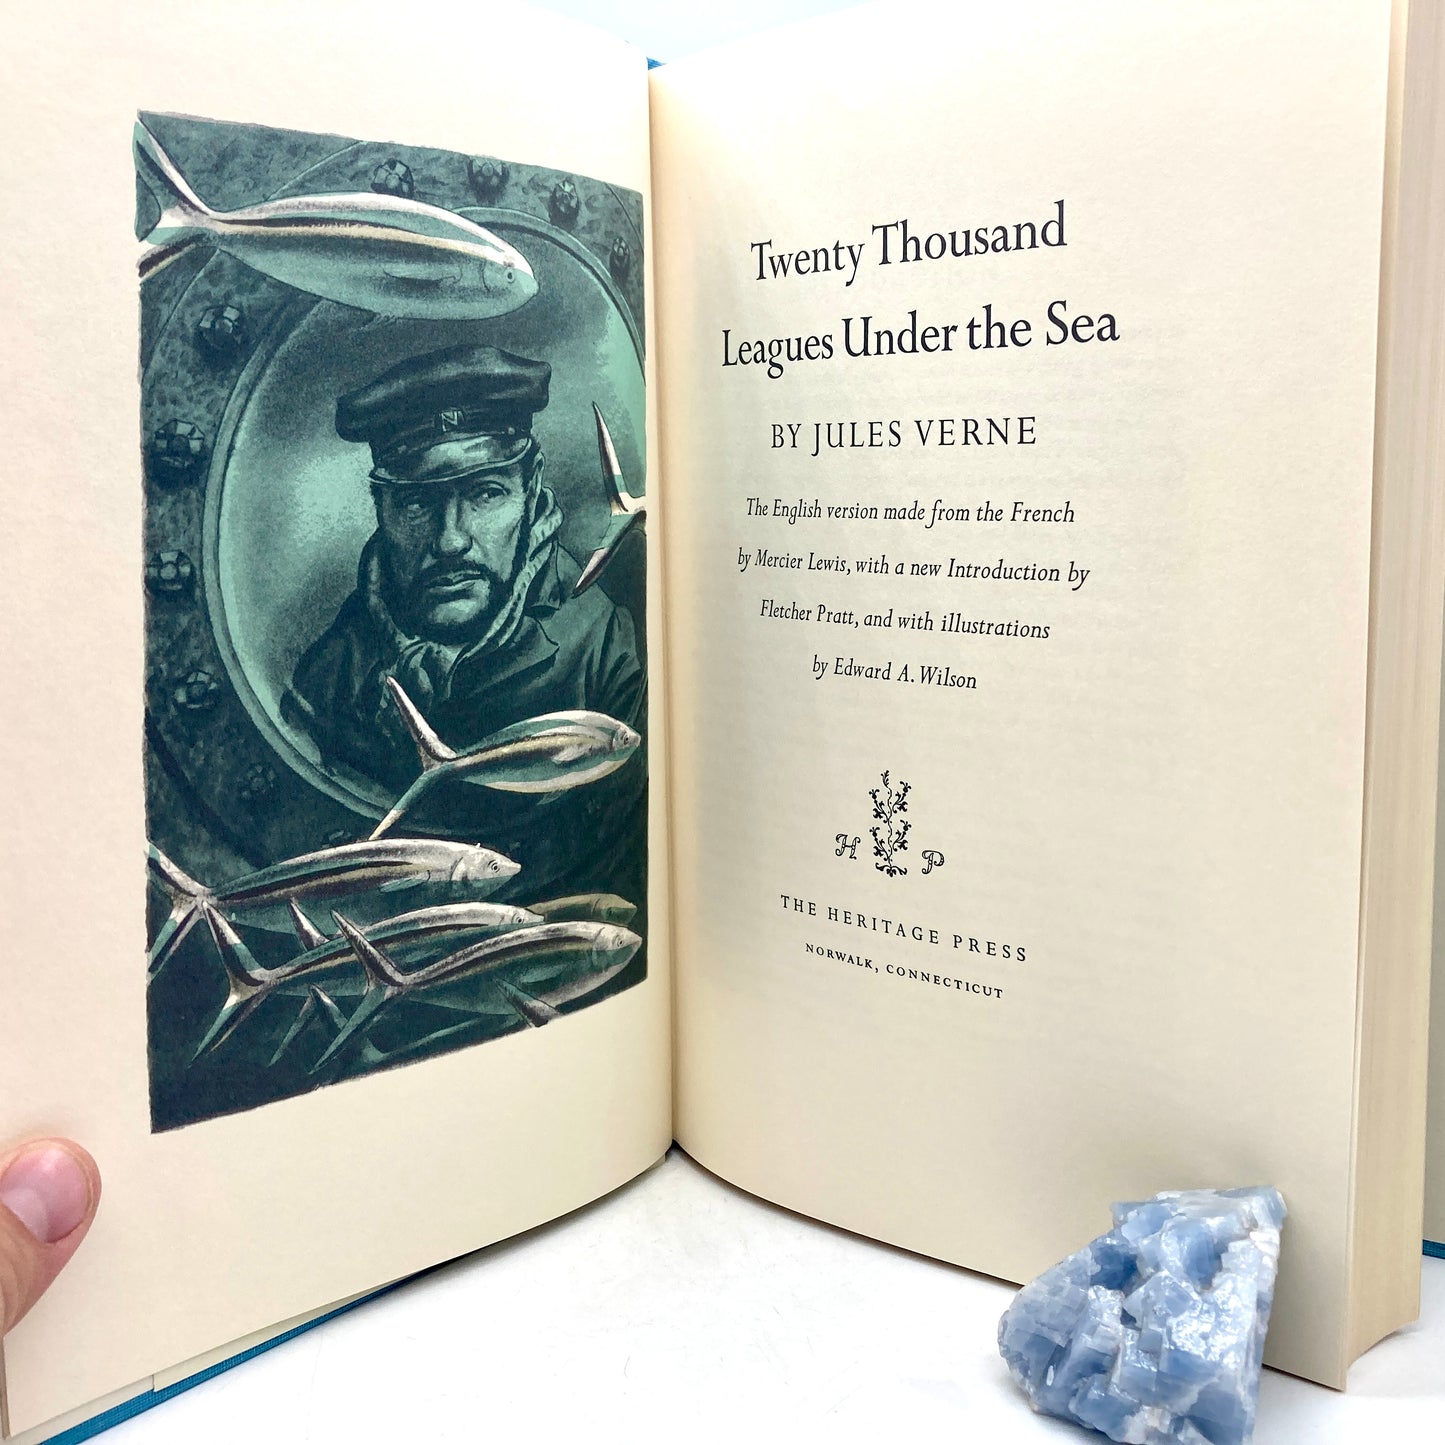 VERNE, Jules "Twenty Thousand Leagues Under the Sea" [Heritage Press, 1956]